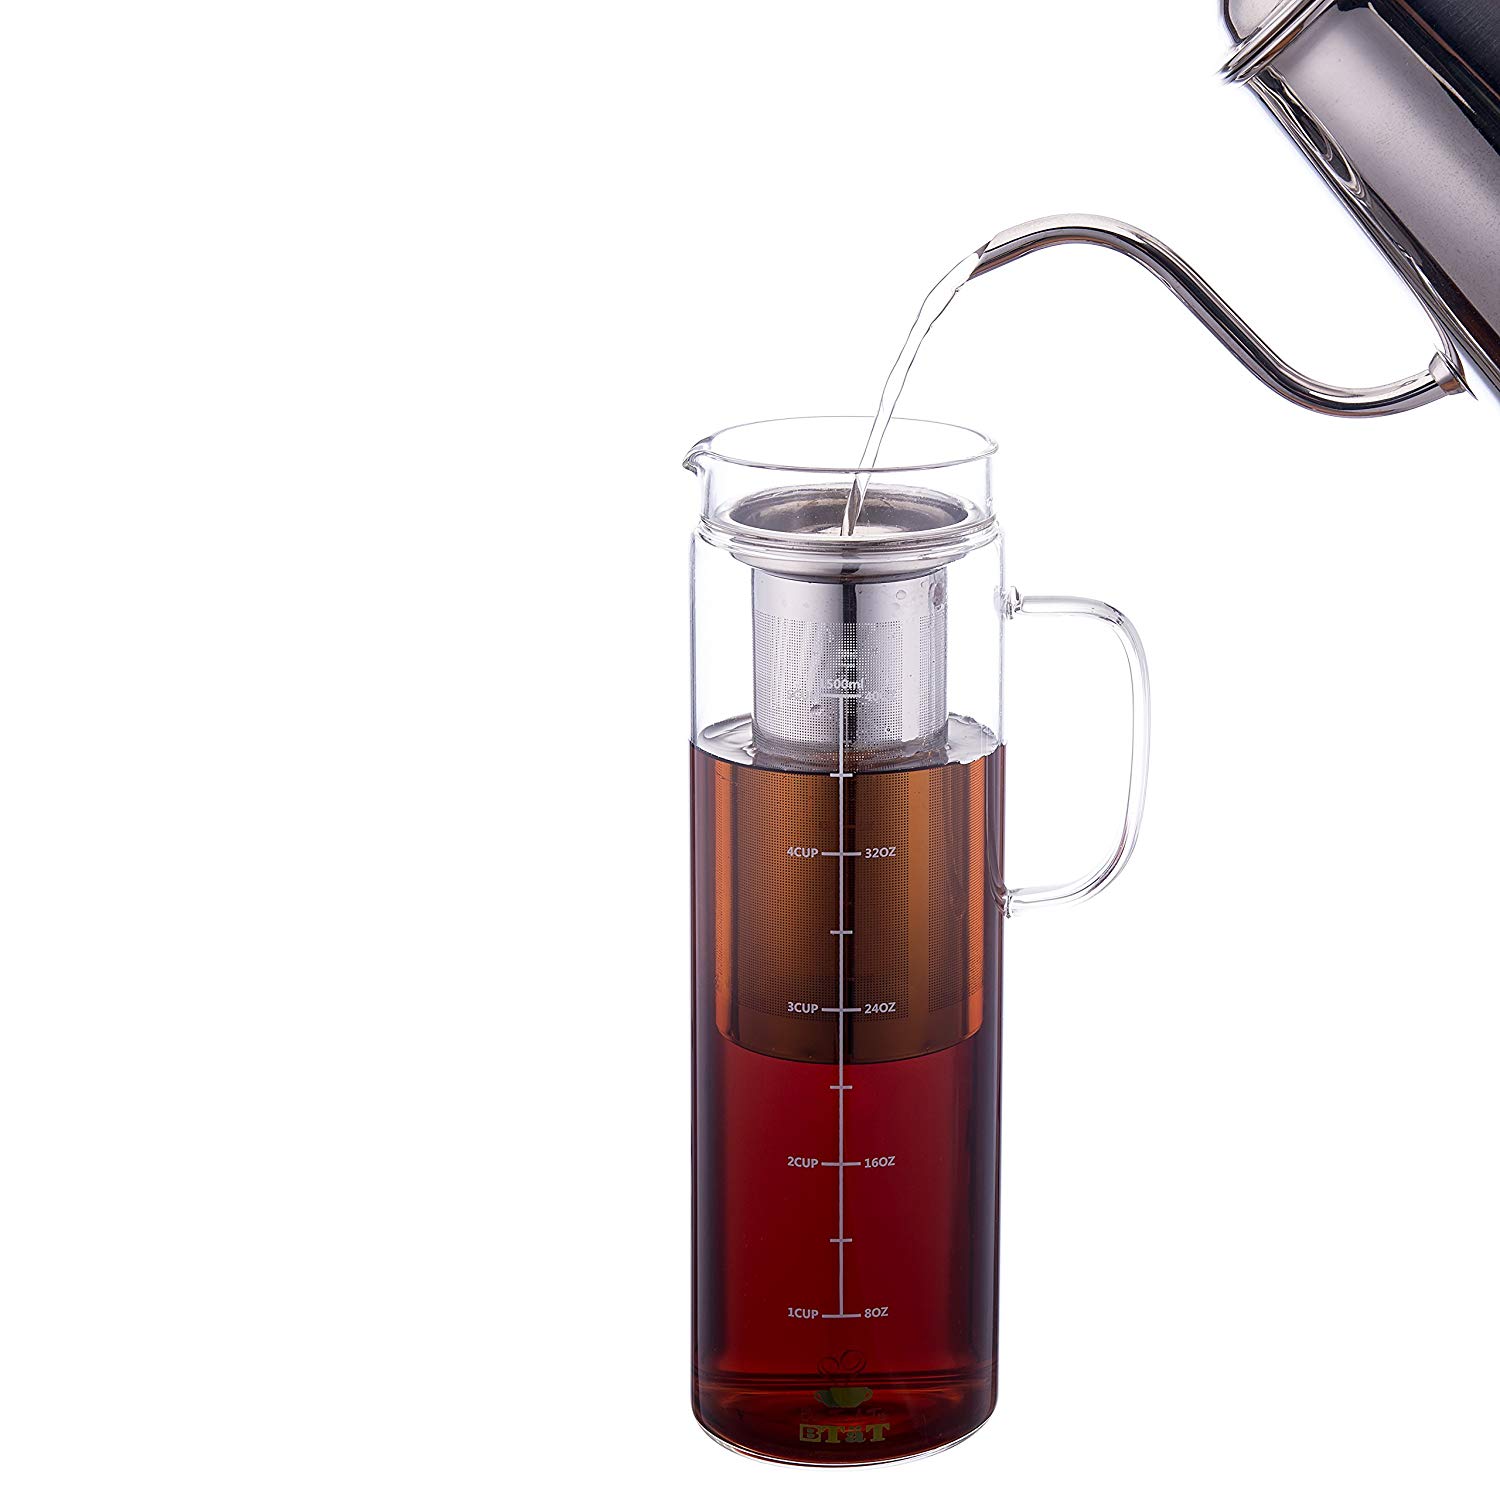 BTäT- Cold Brew Coffee Maker – BTAT